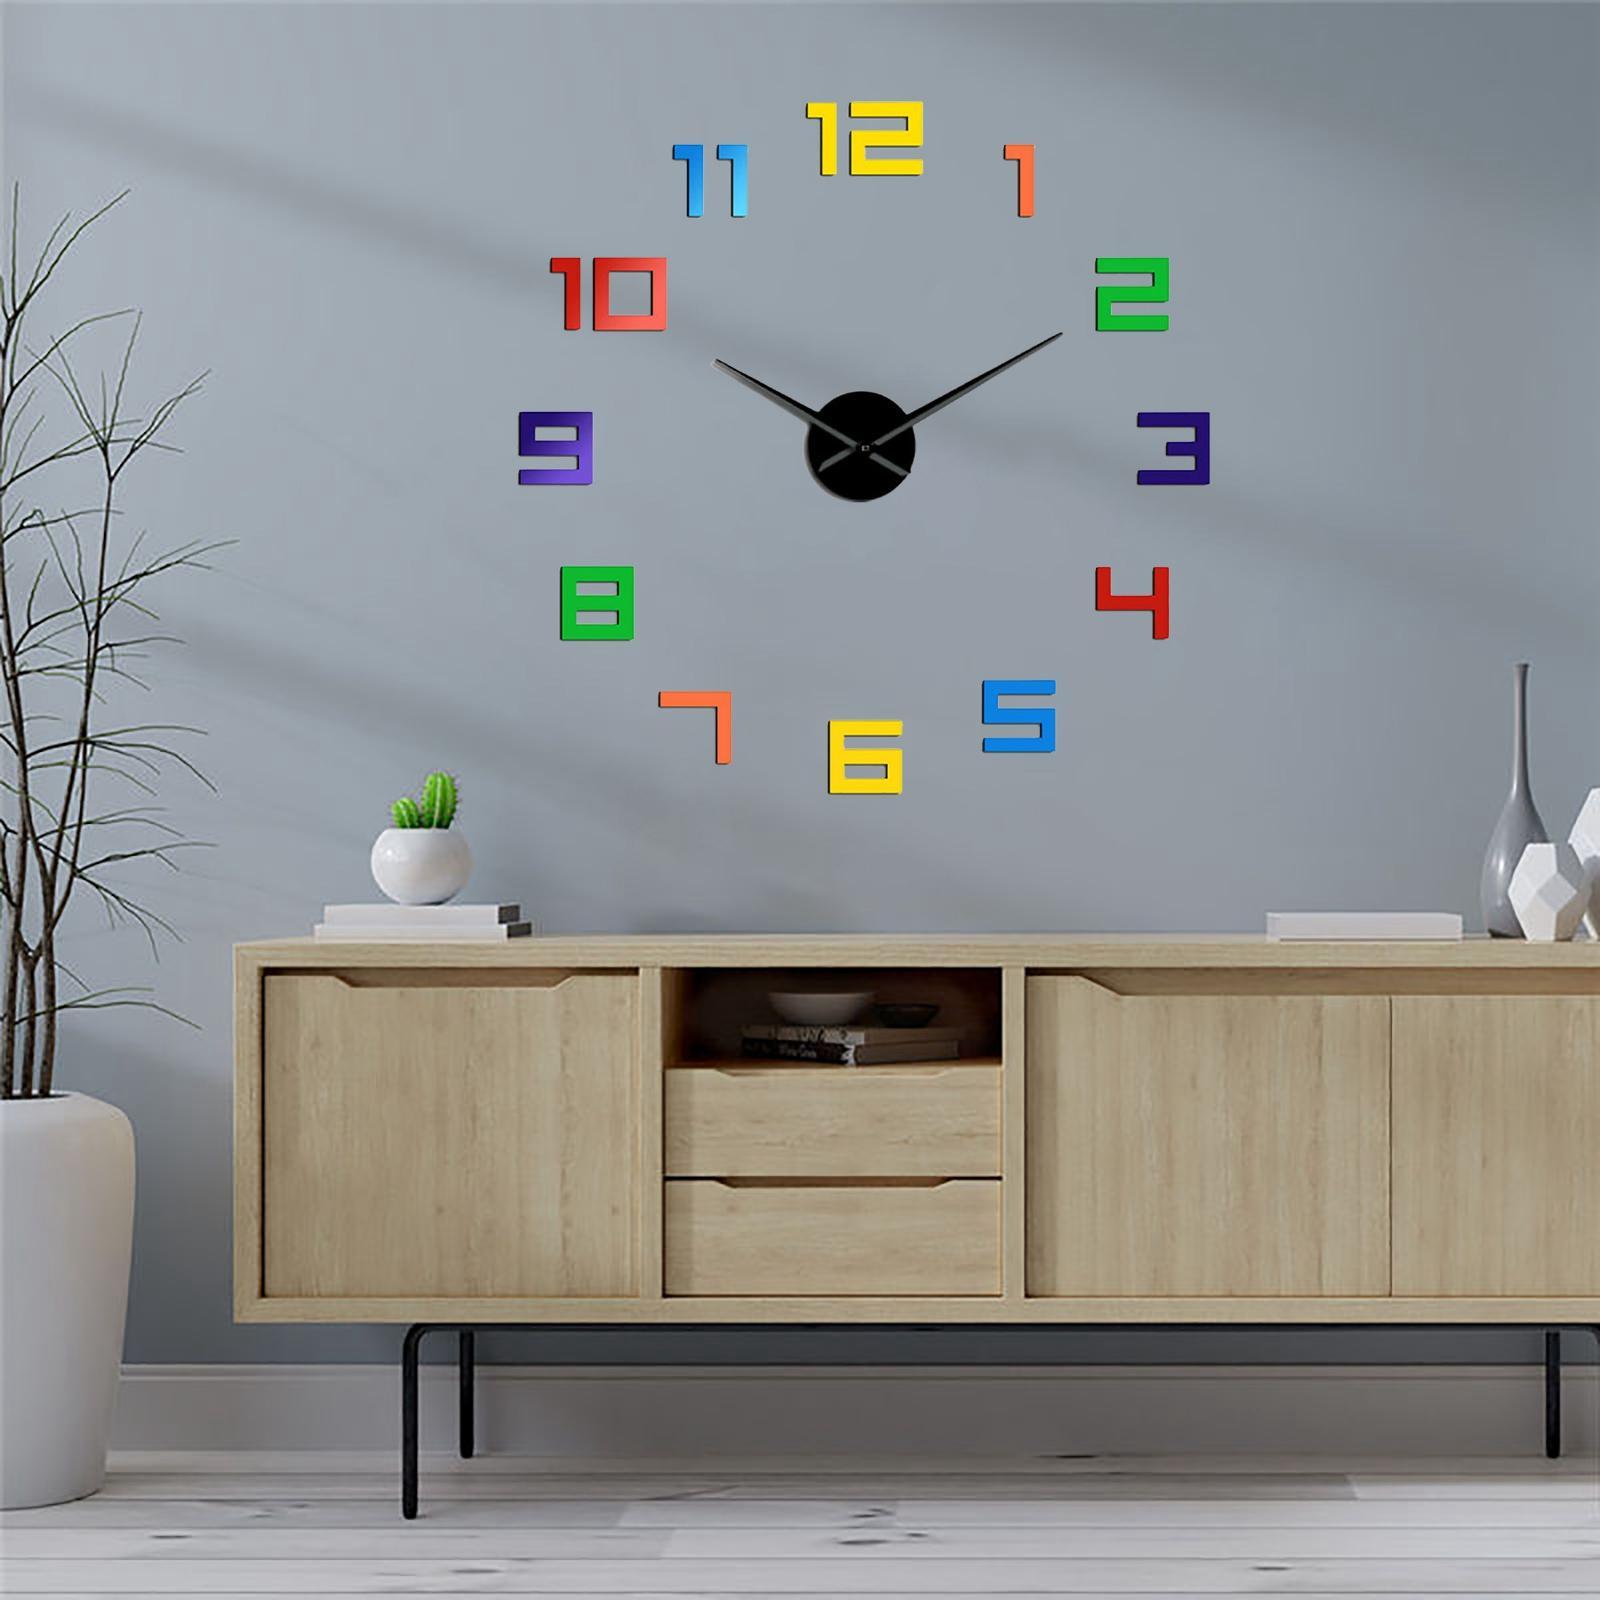 3D DIY Wall Clock Wall Stickers Frameless Decorative Wall Clocks for Office Home Shop